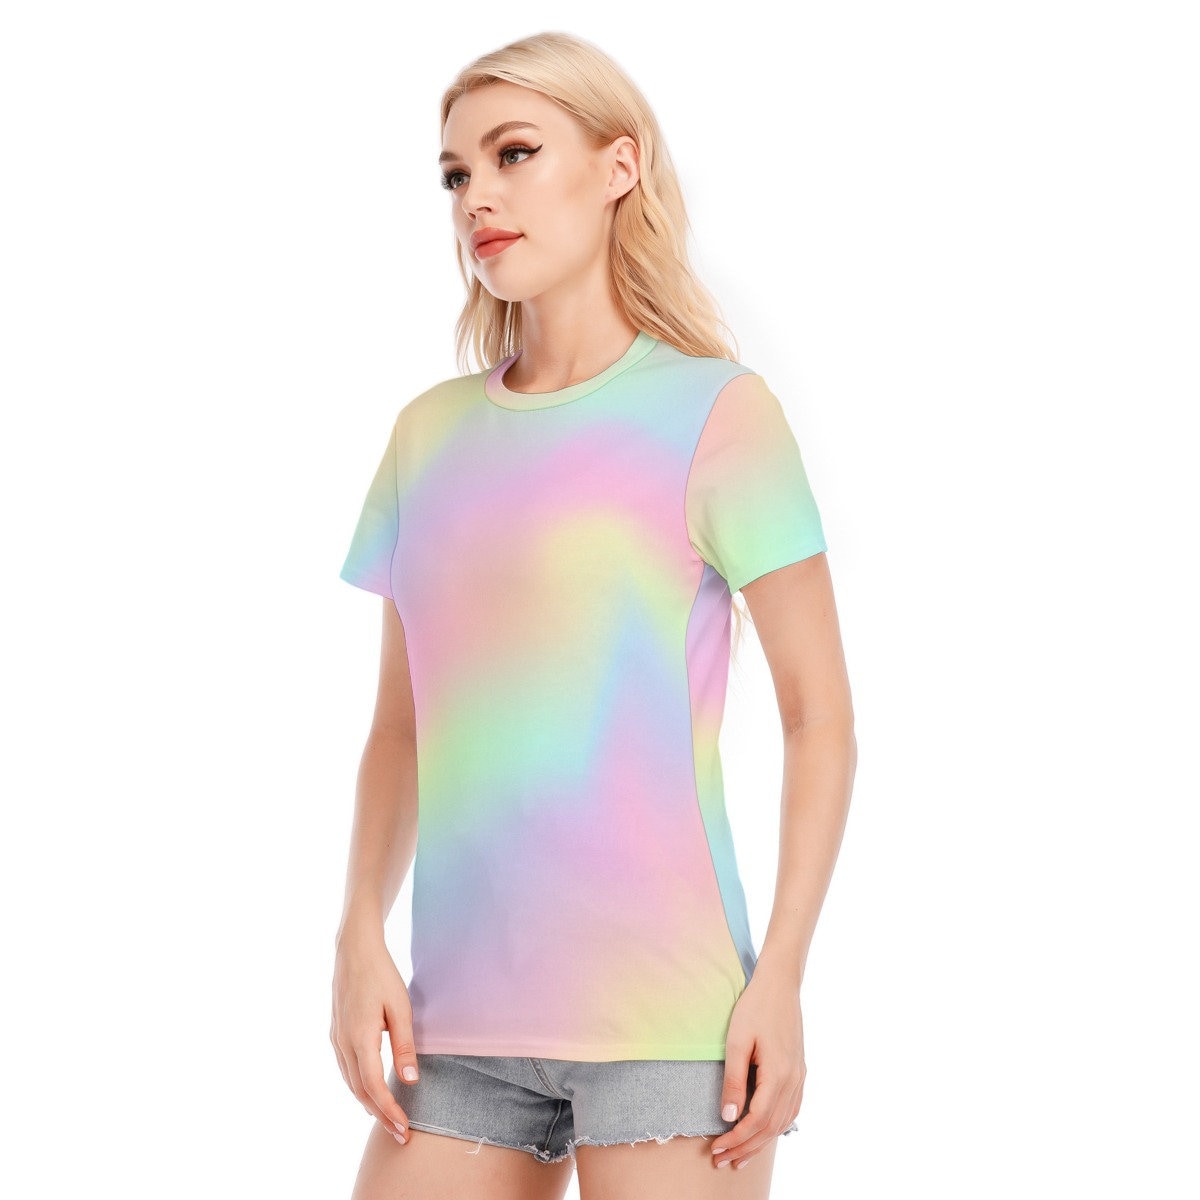 Ombre Top, Rainbow Tops, Ombre Tshirt, Rainbow T-shirt, Womens Tshirts, Unique Tshirt, Ombre T-shirt, Abstract Tshirt, Artistic Tshirt